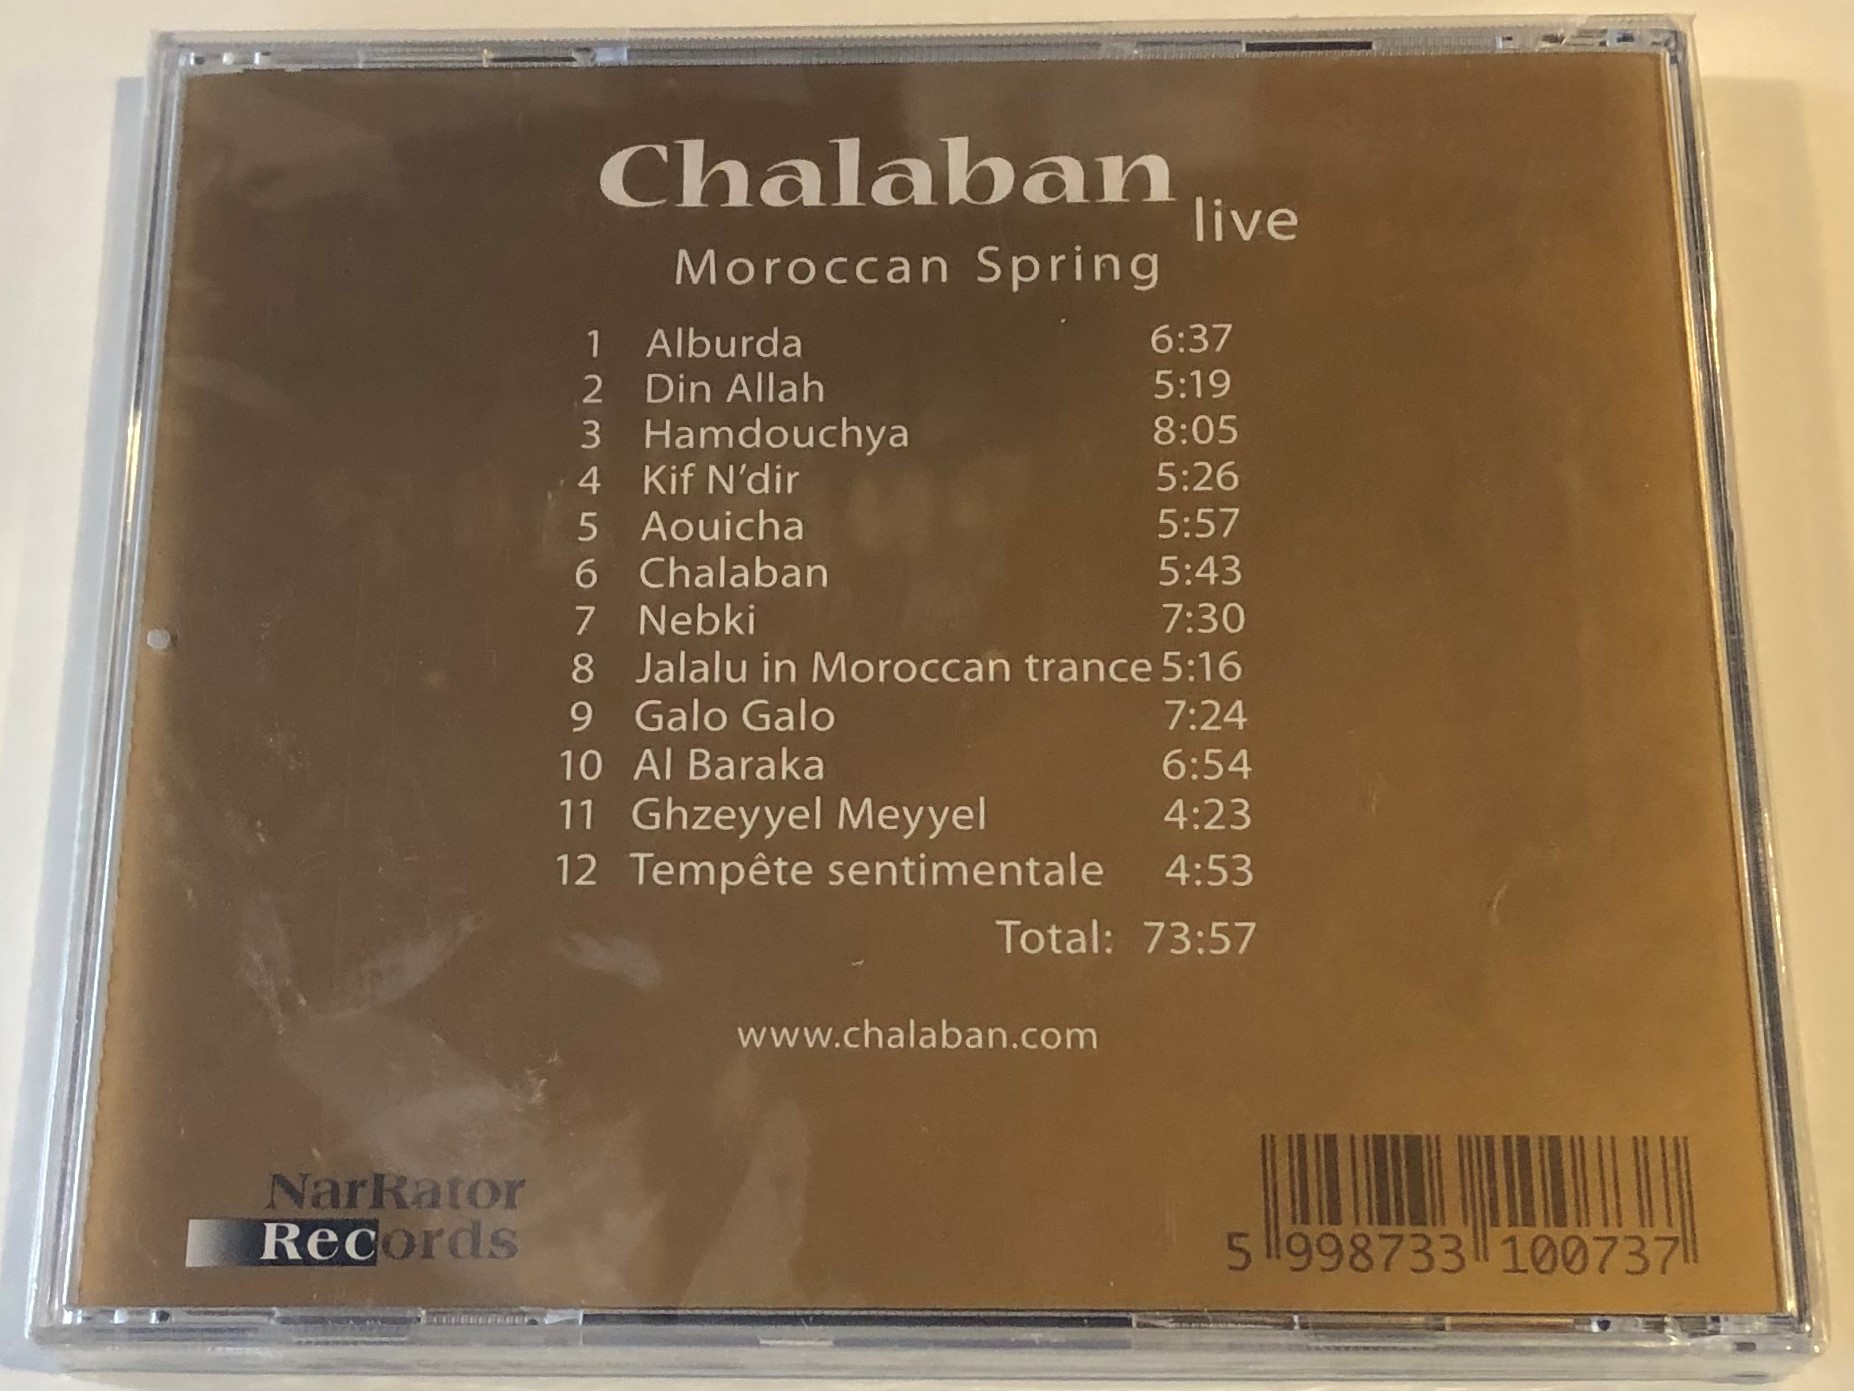 chalaban-live-moroccan-spring-narrator-records-audio-cd-5998733100737-2-.jpg